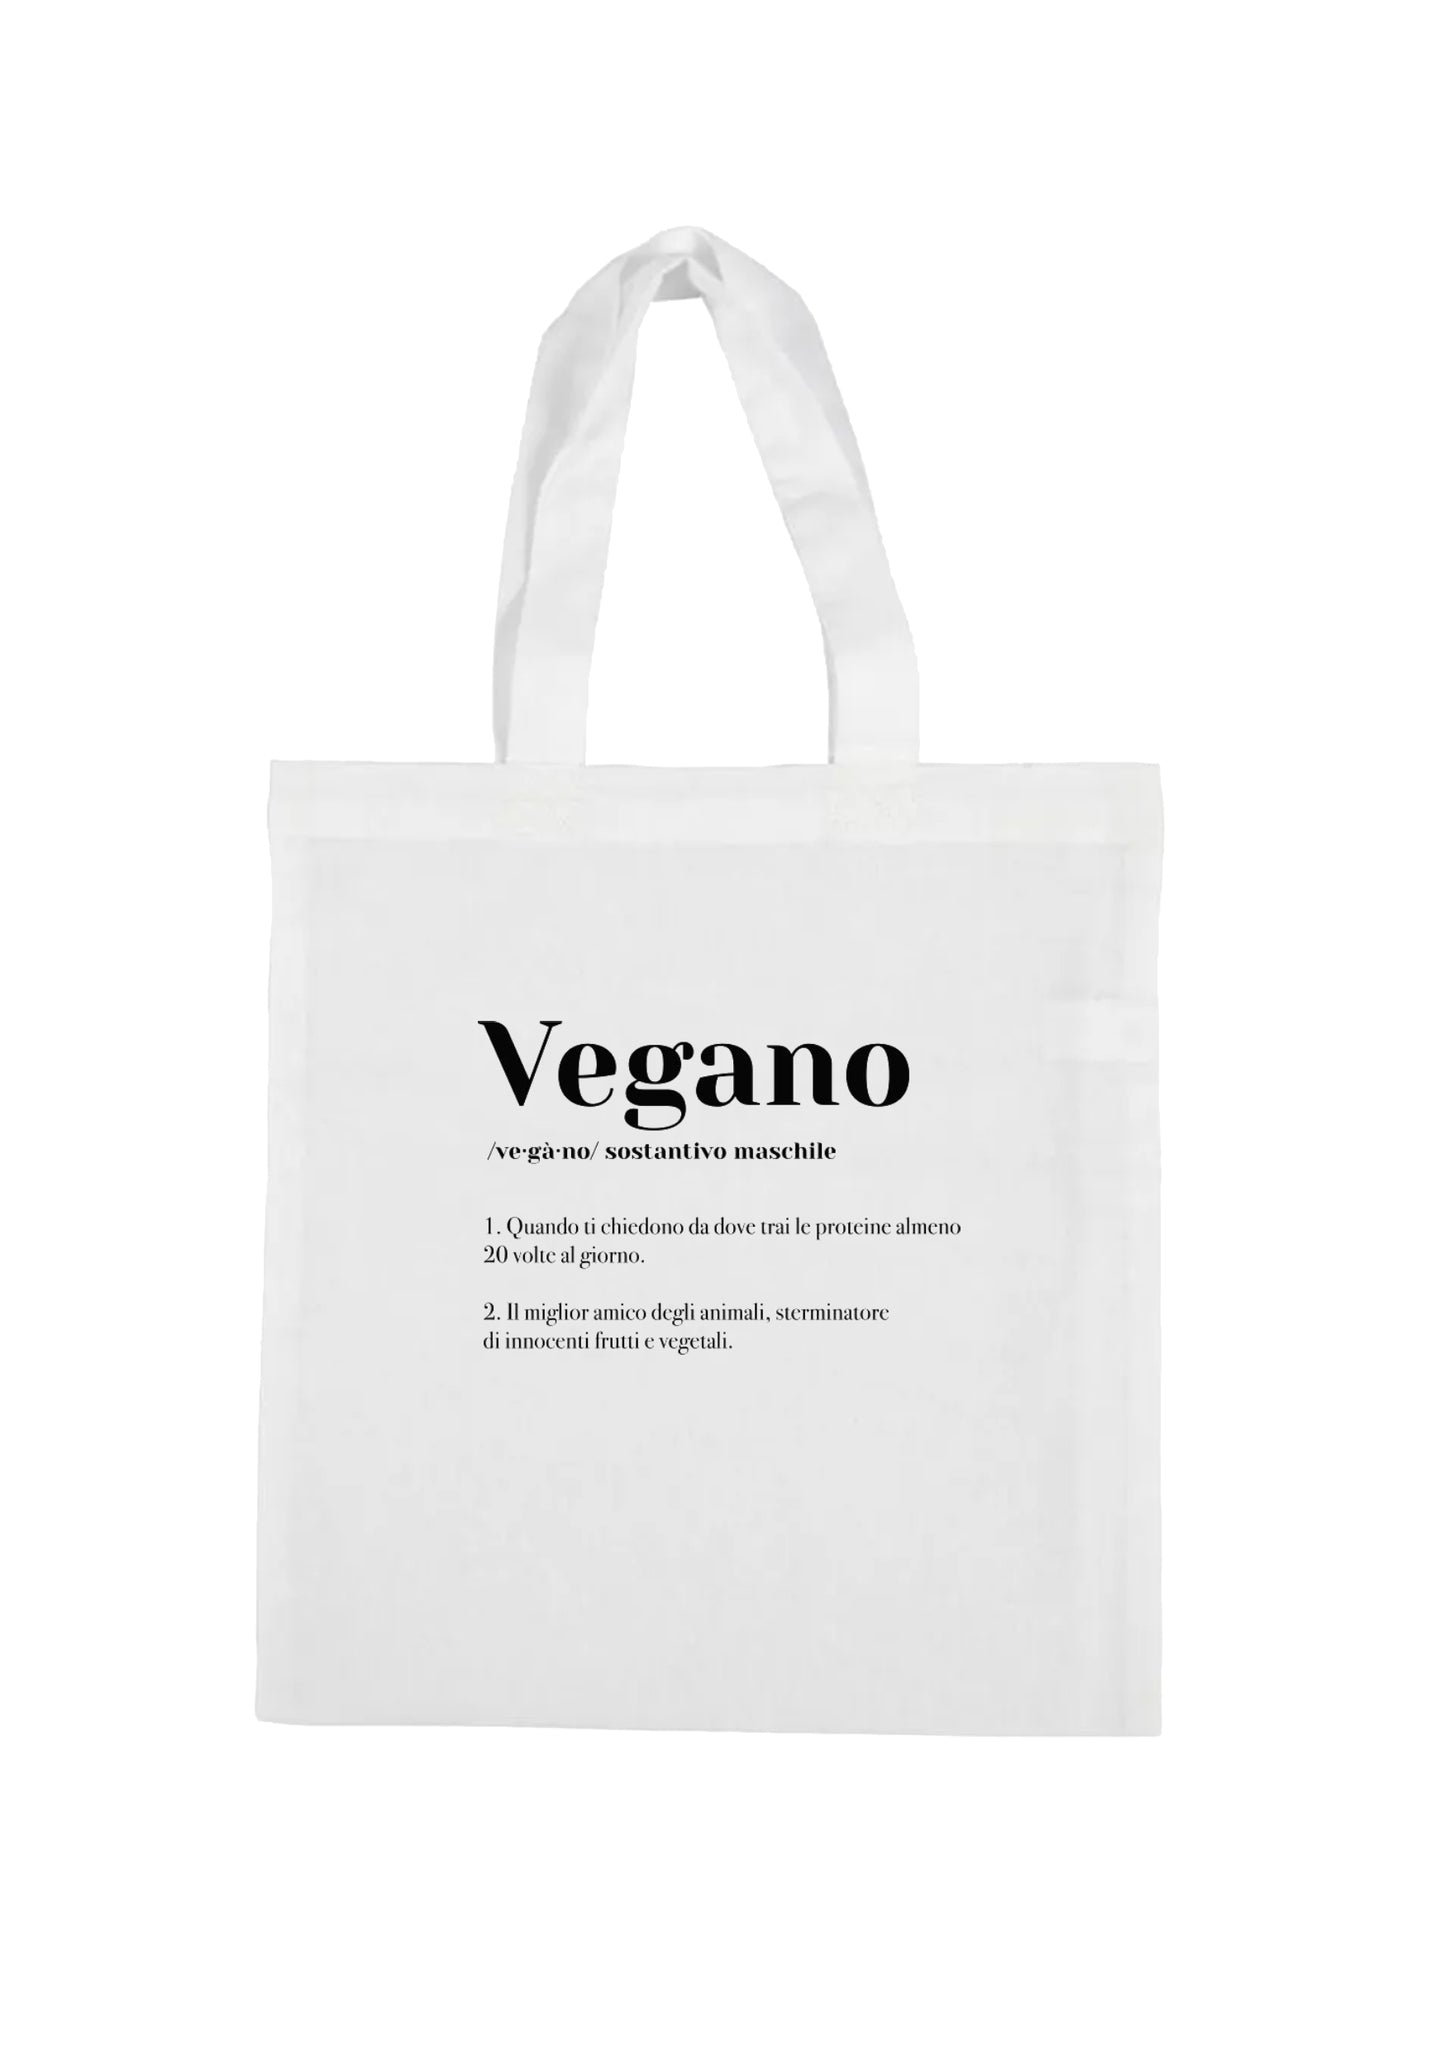 shopping bag bag- vegan dictionary meaning